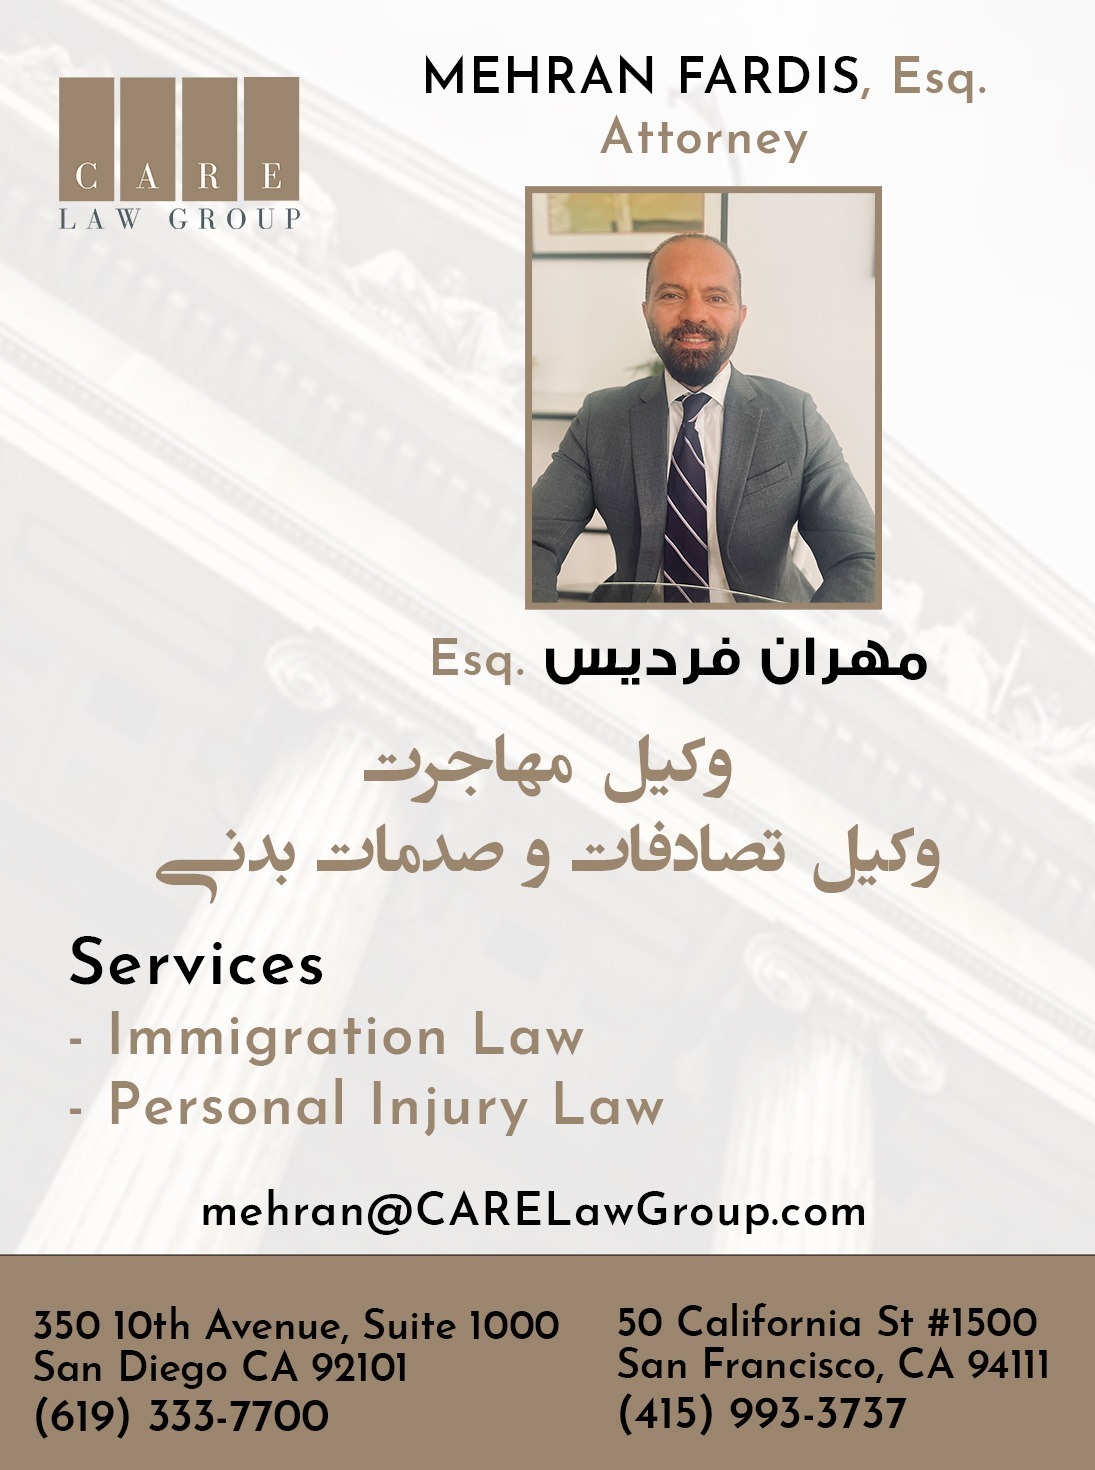 Mehran Fardis, Esq. Attorney